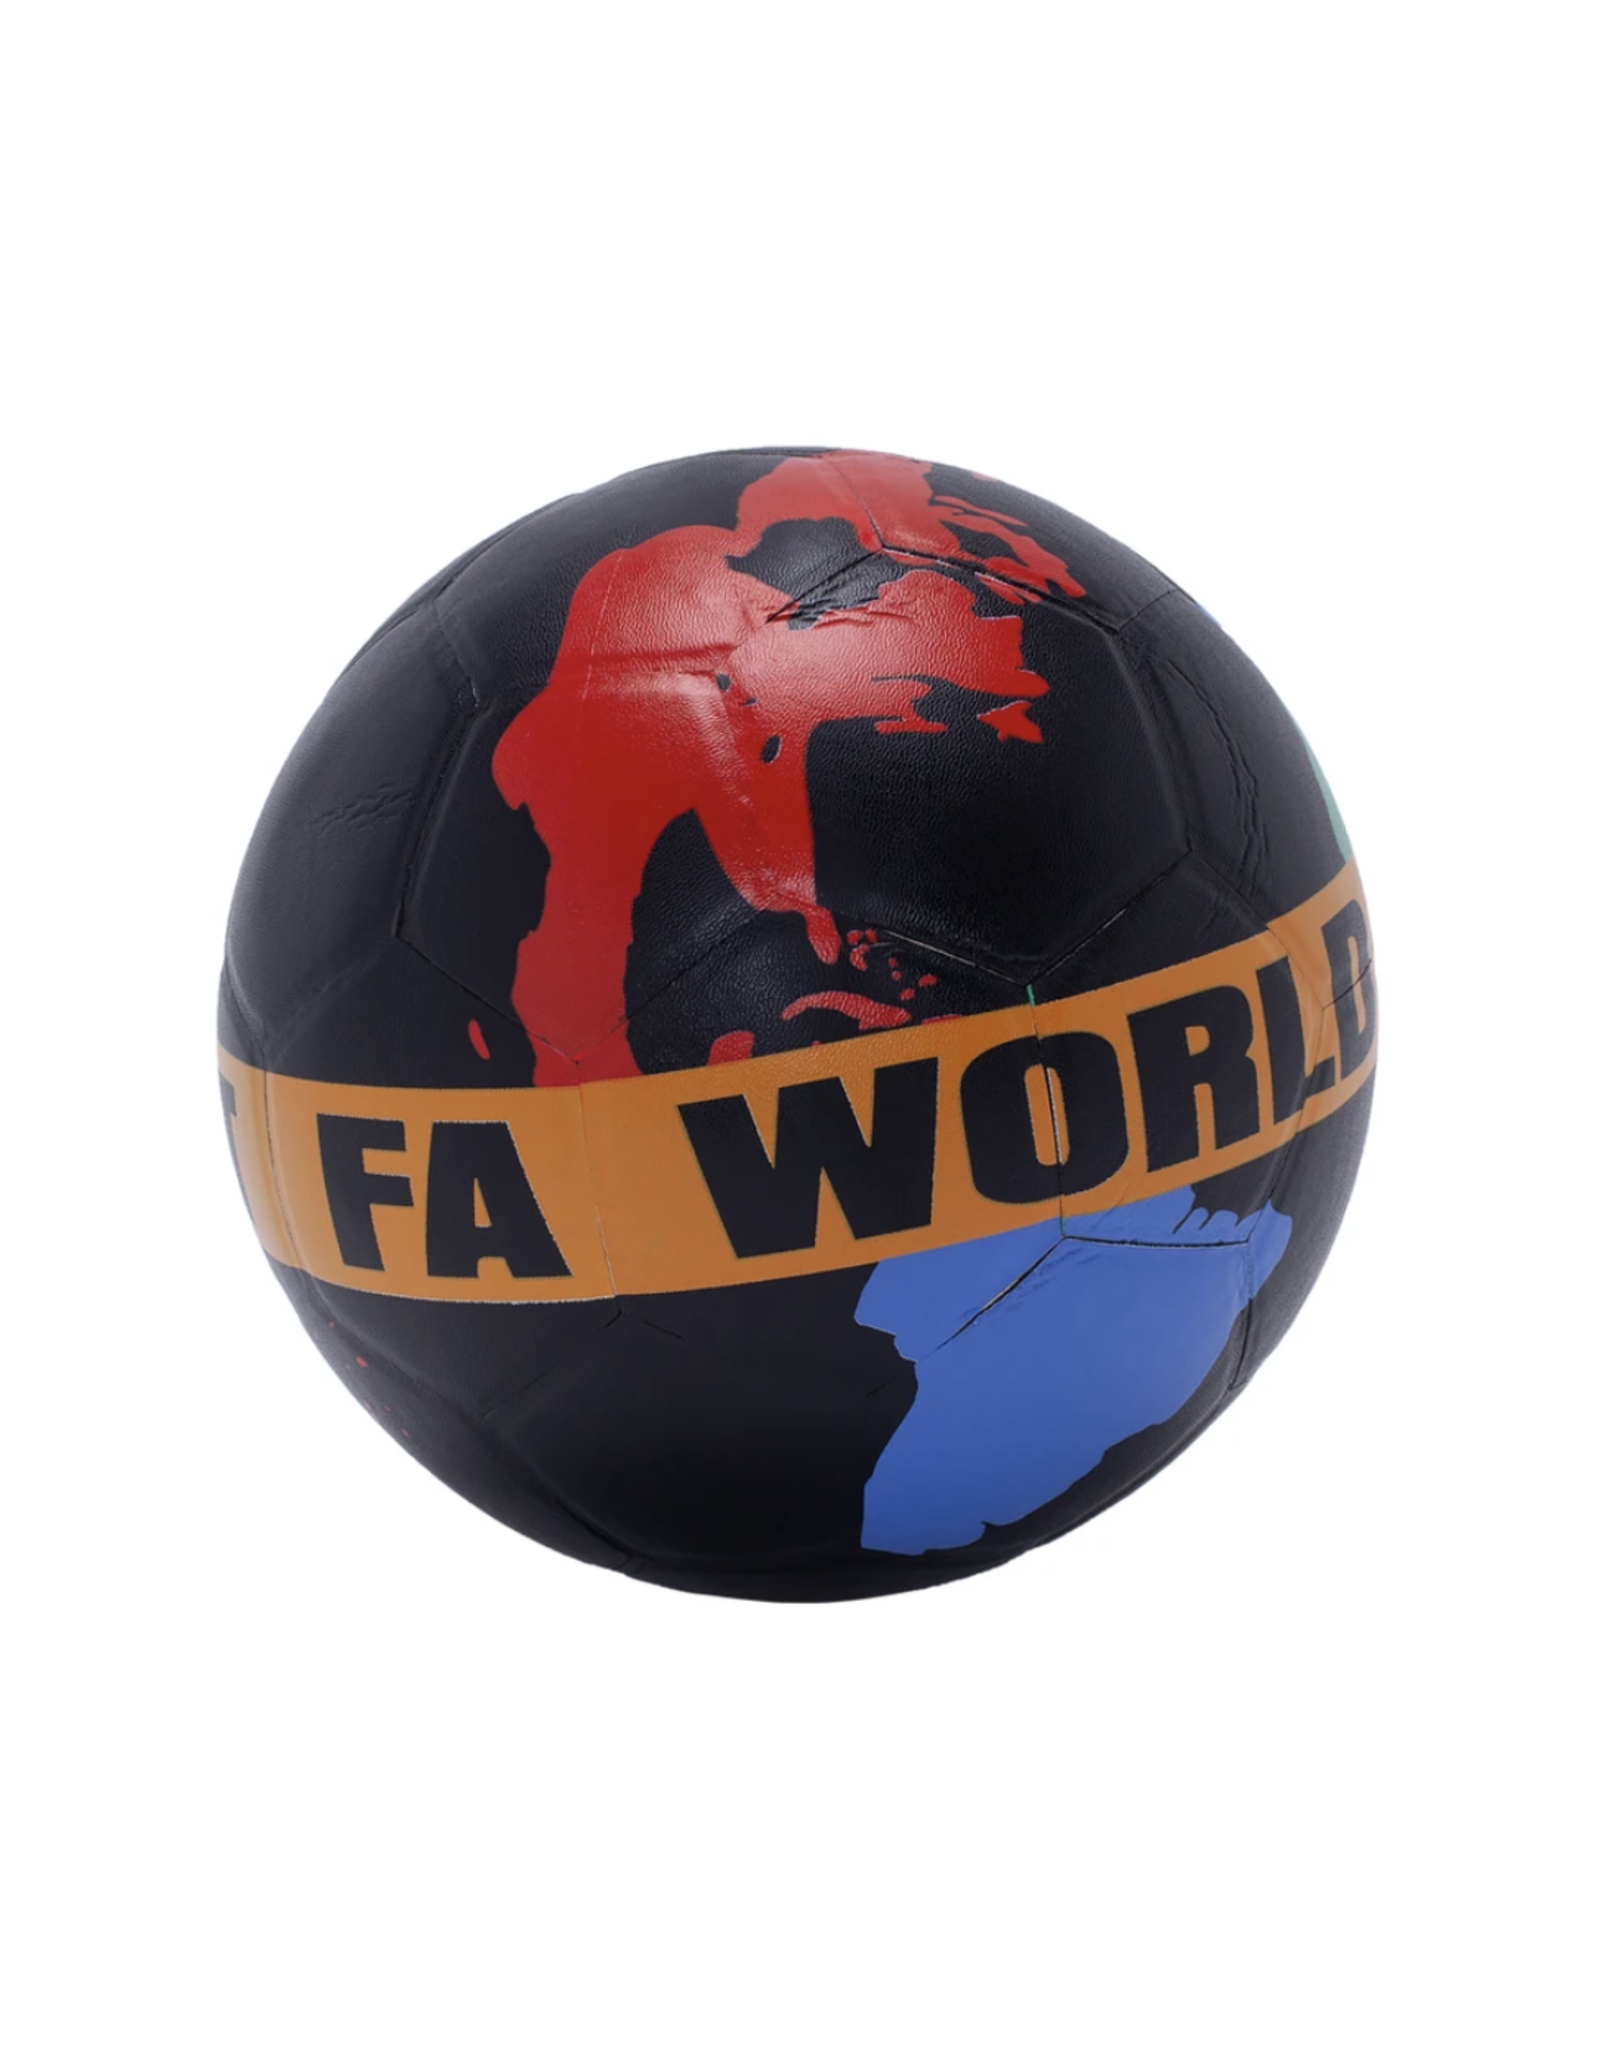 Fa World Soccer Ball Multi Palm Isle Skateshop